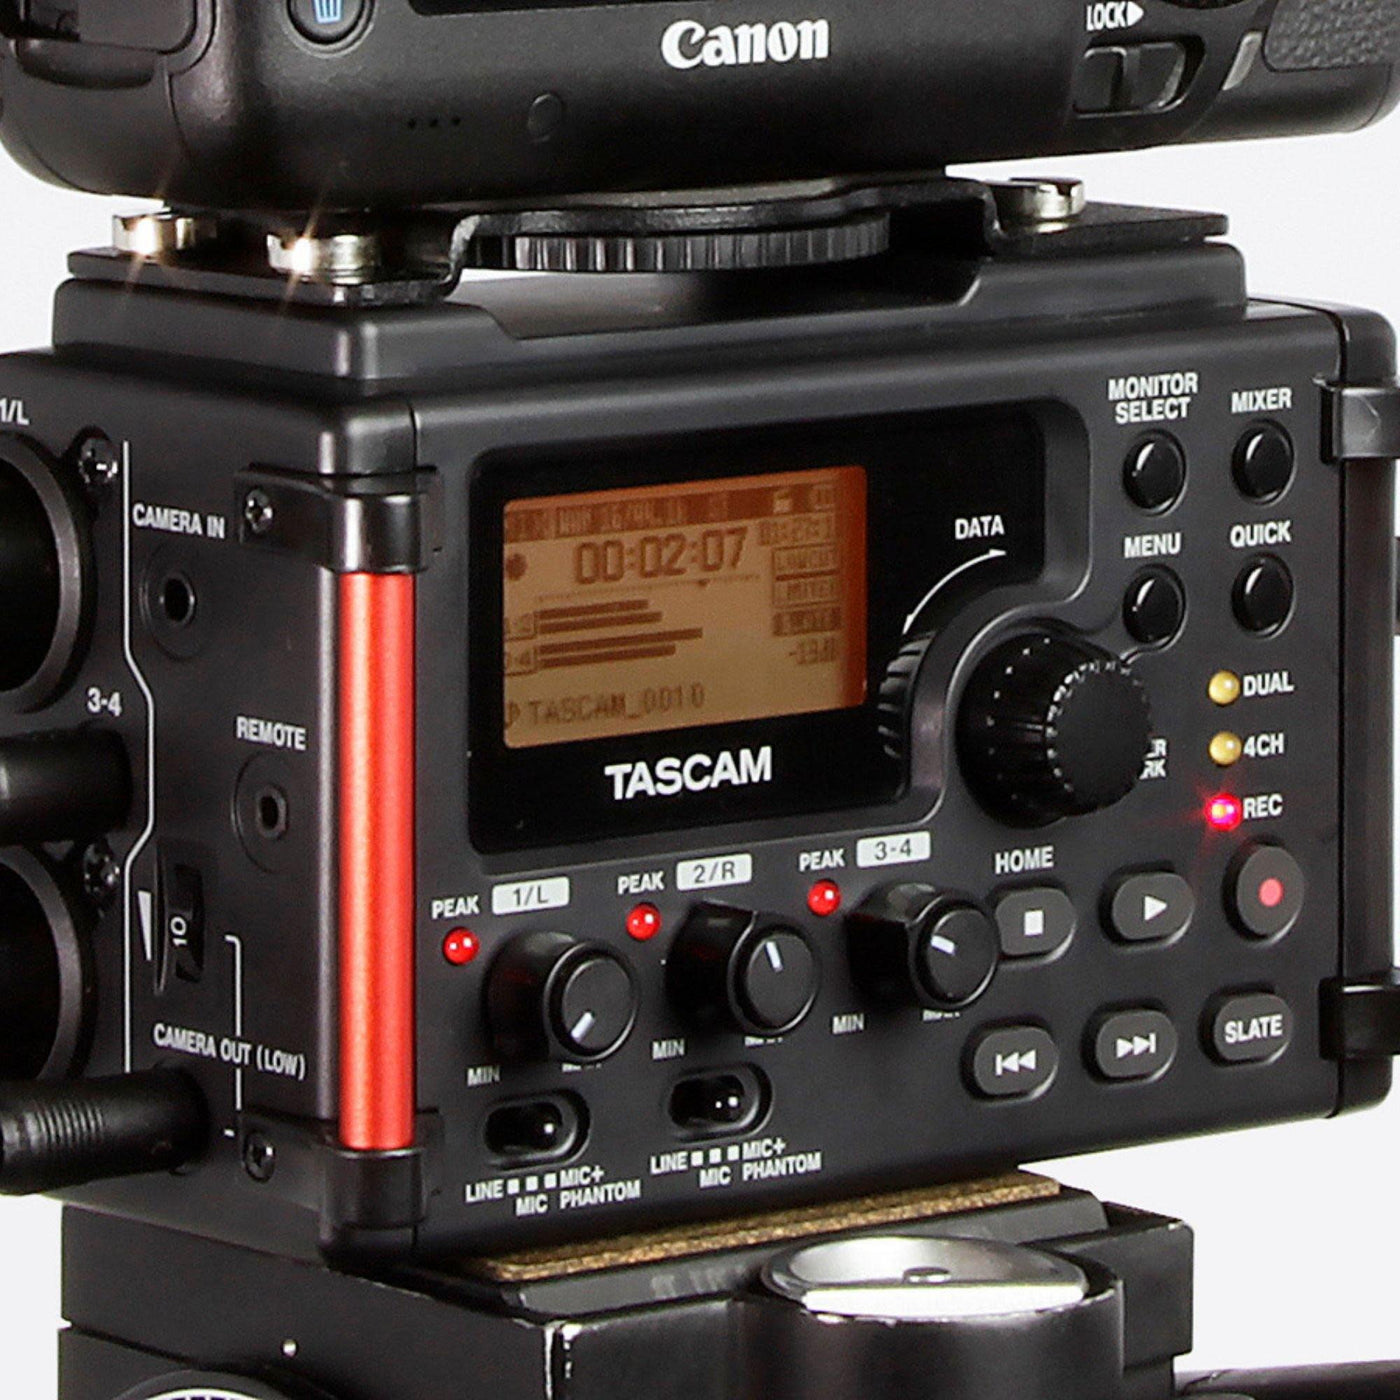 Tascam DR-60DMKII 4-Channel Portable Audio Recorder for DSLR